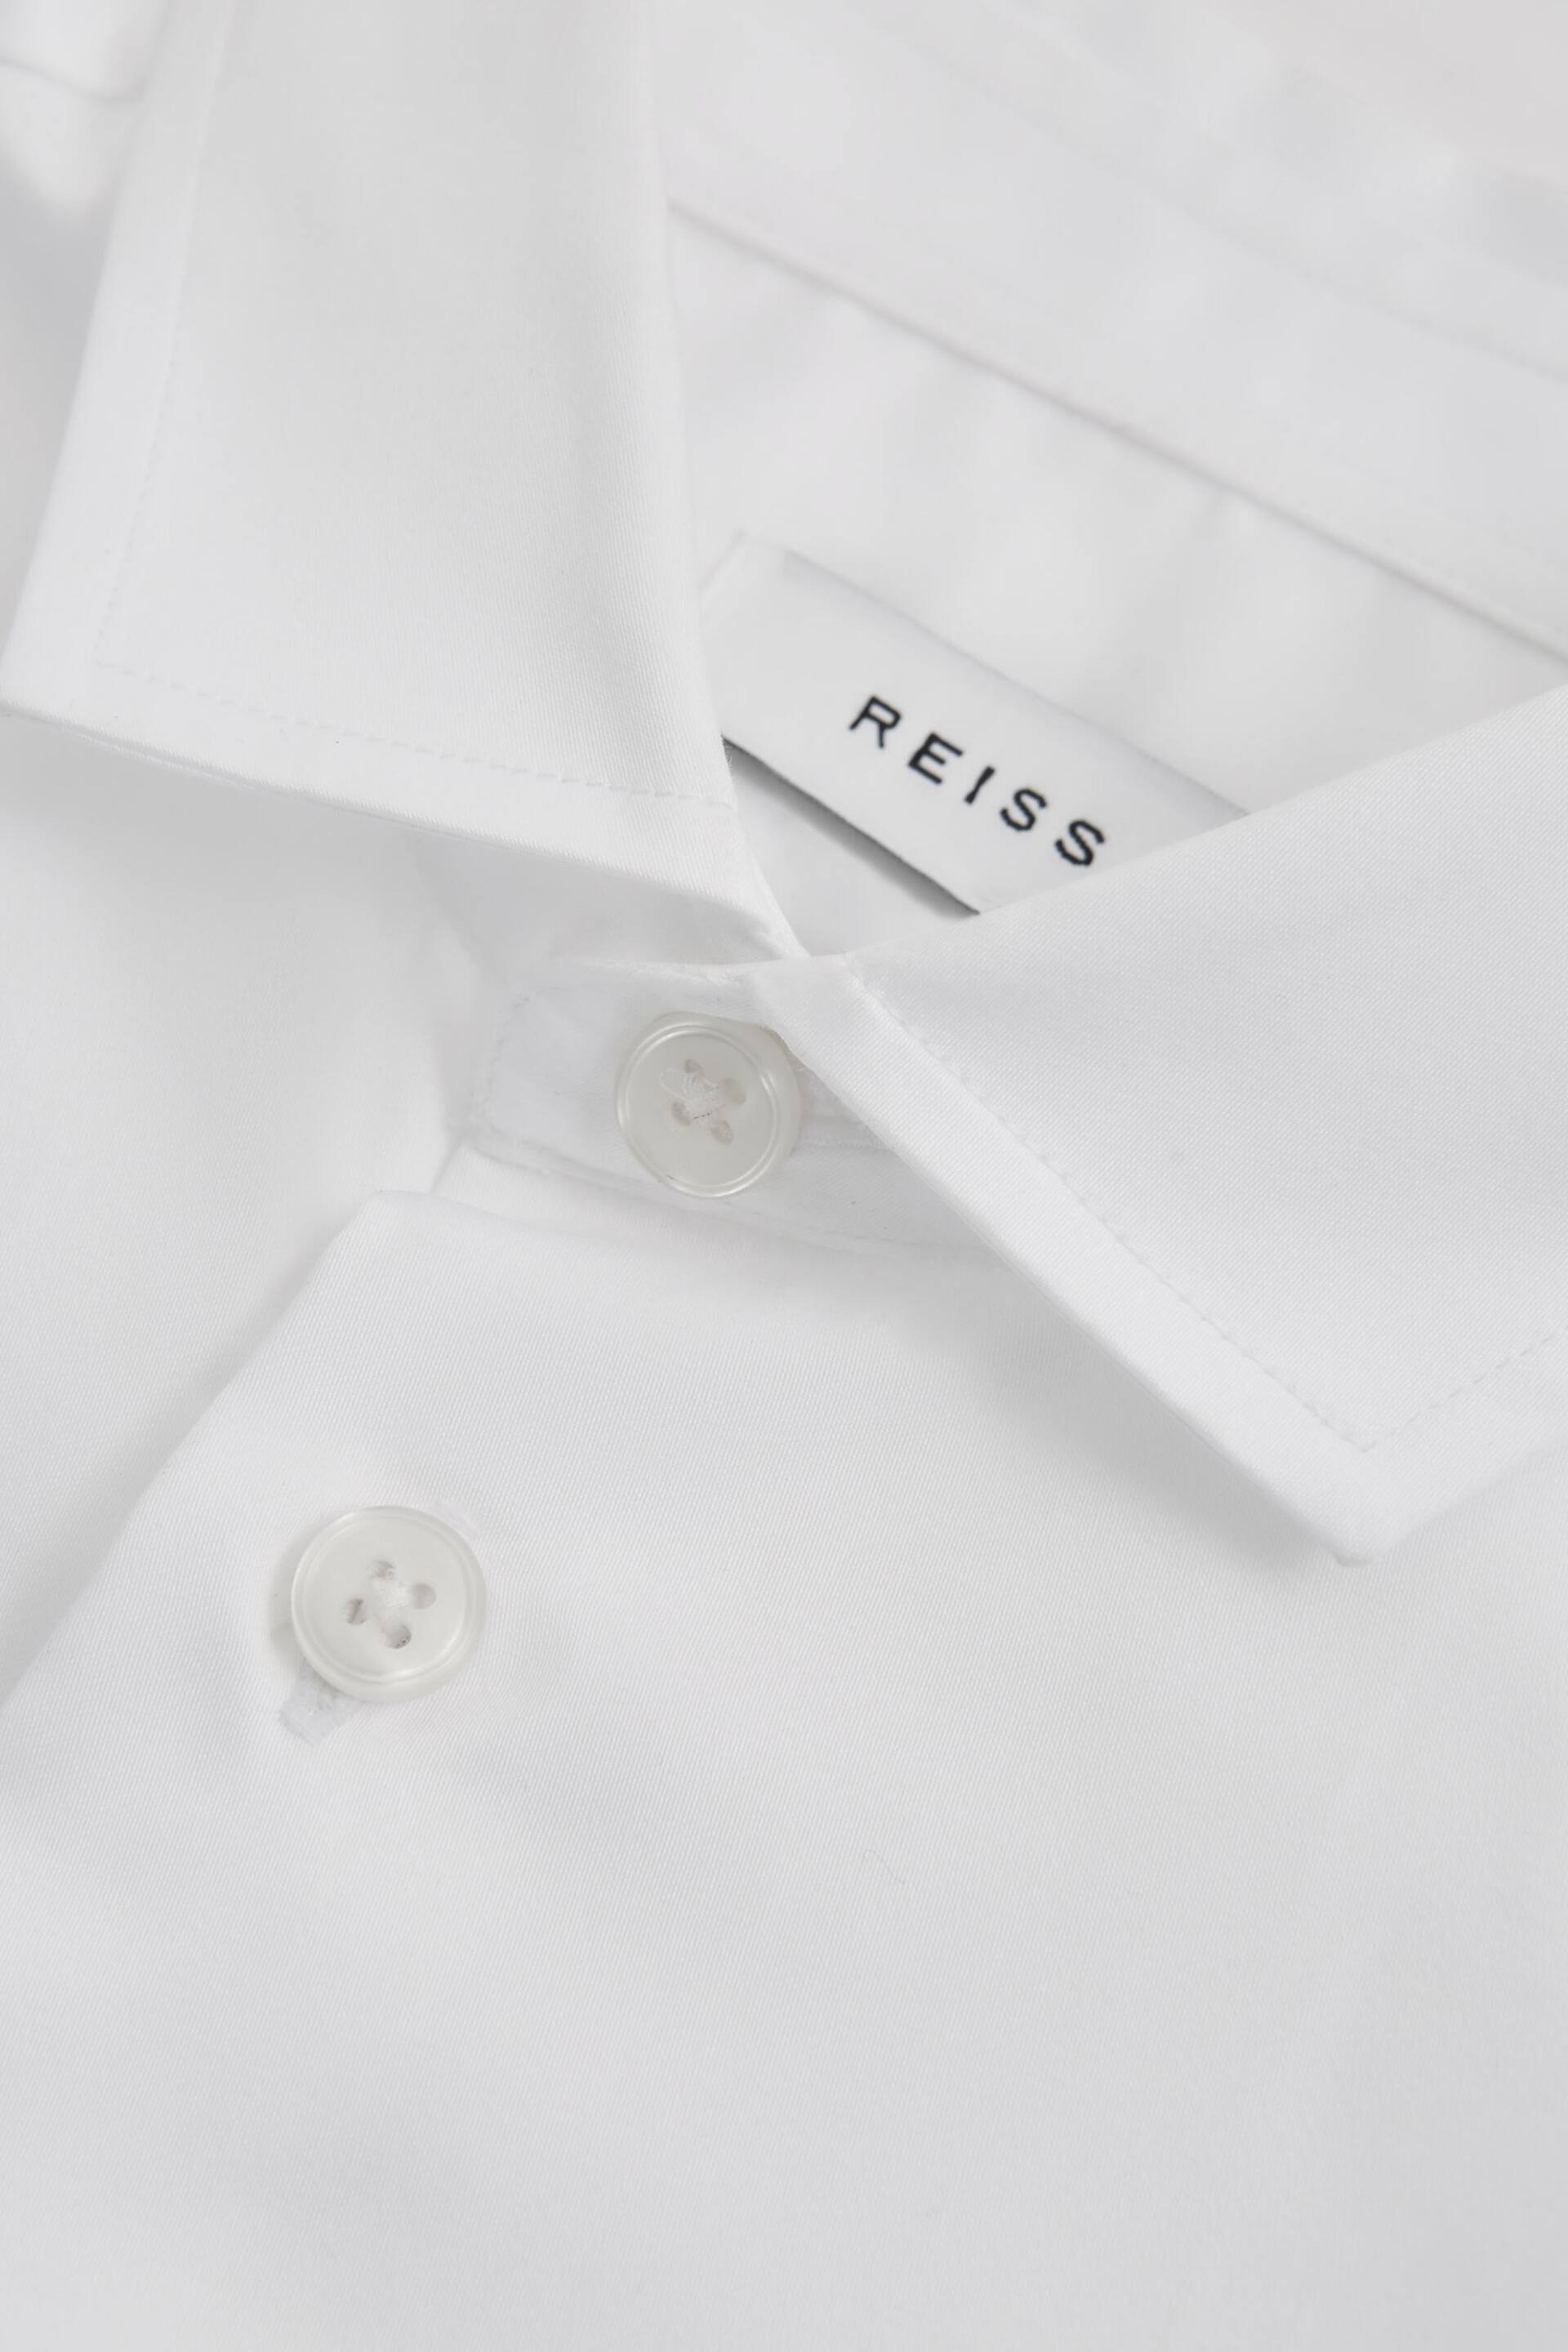 Reiss White Remote Junior Slim Fit Cotton Shirt - Image 6 of 6